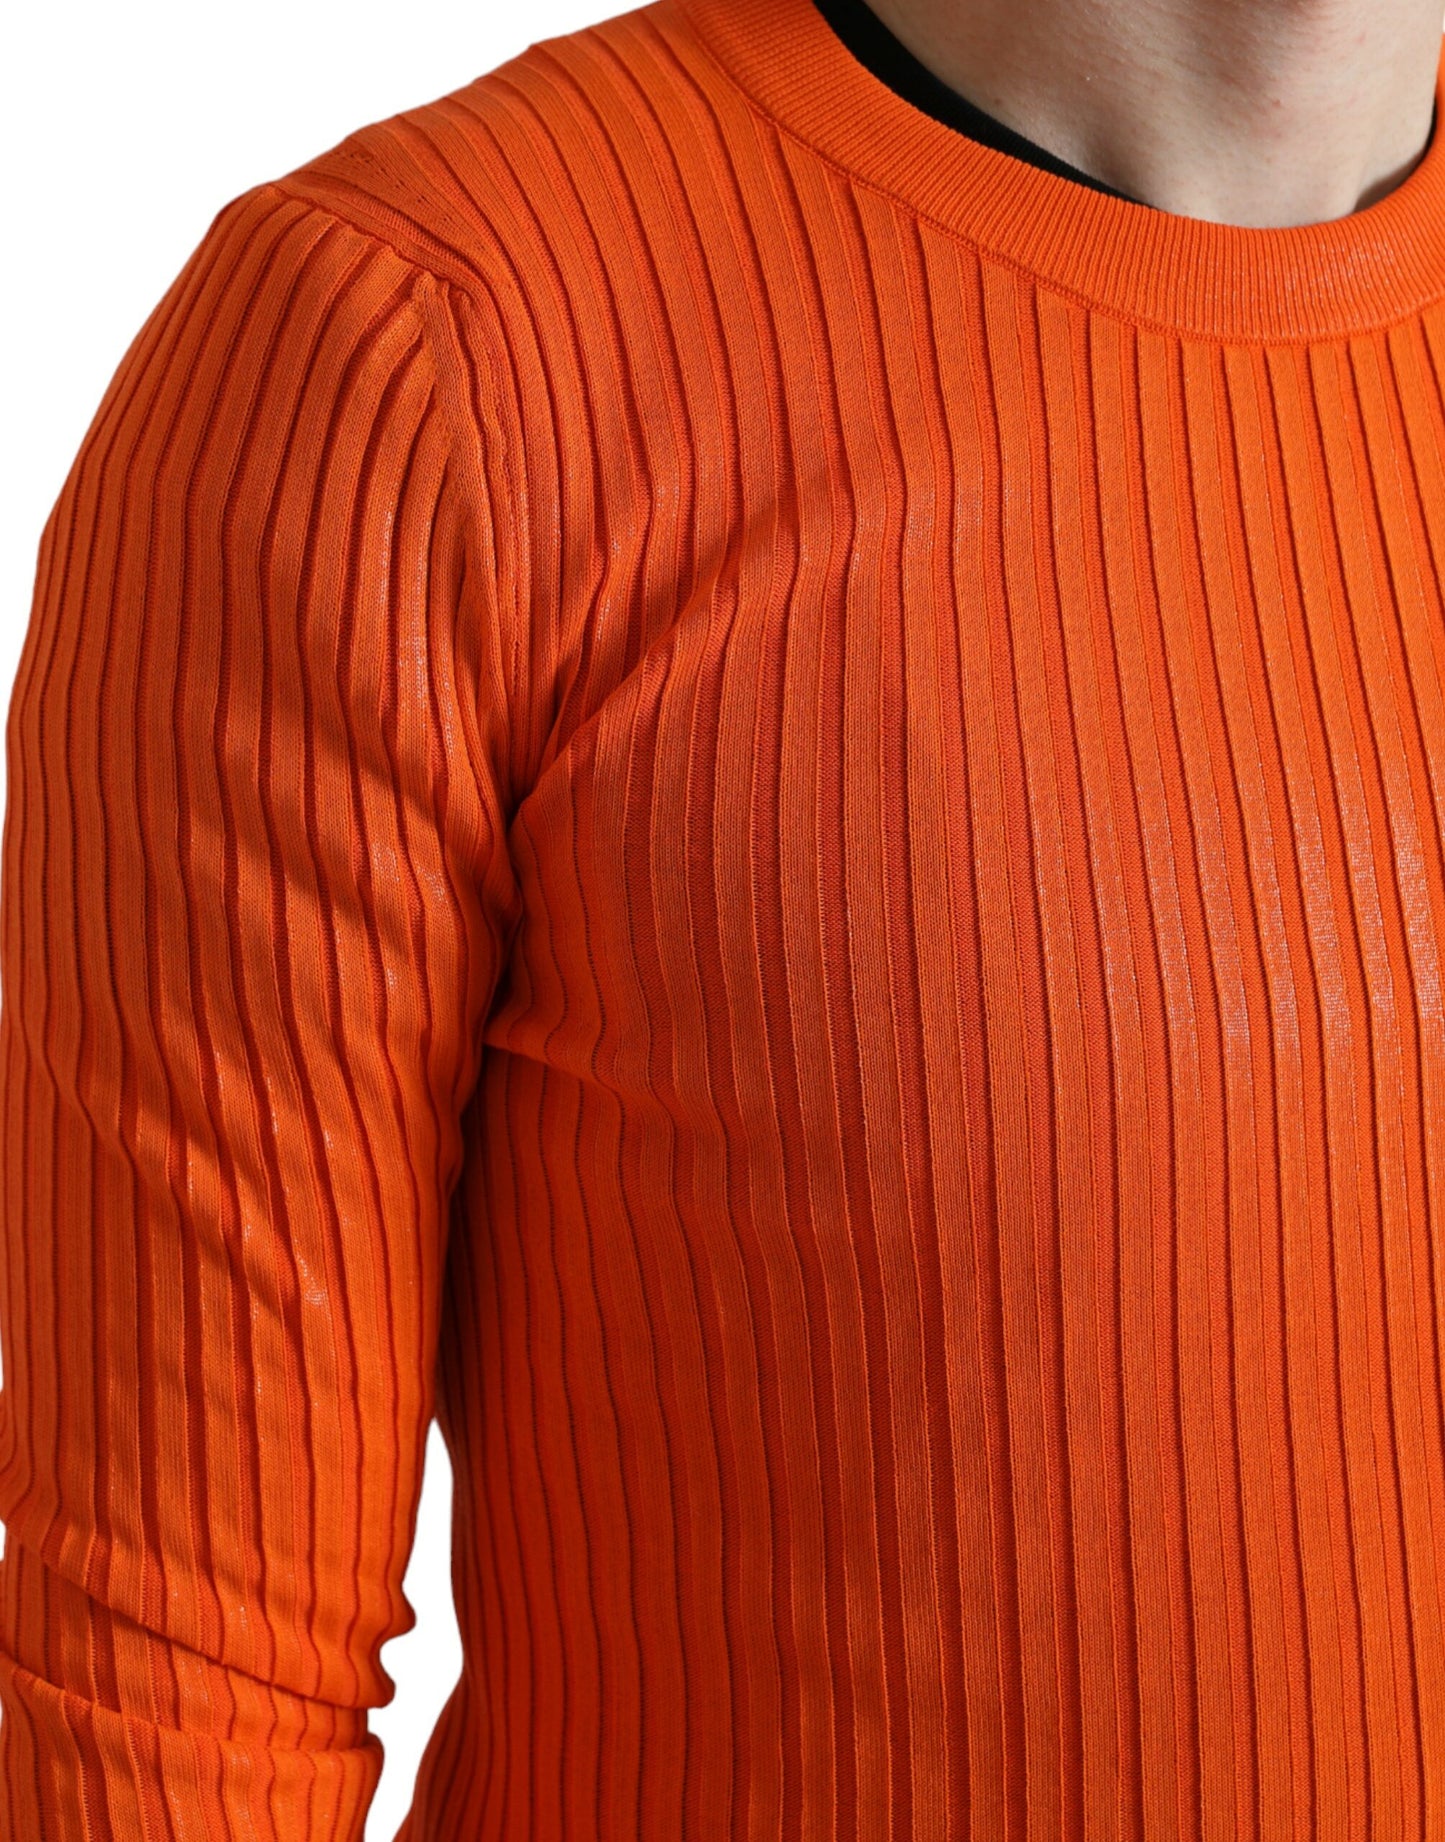 Dolce & Gabbana Sleek Sunset Orange Knitted Pullover Sweater